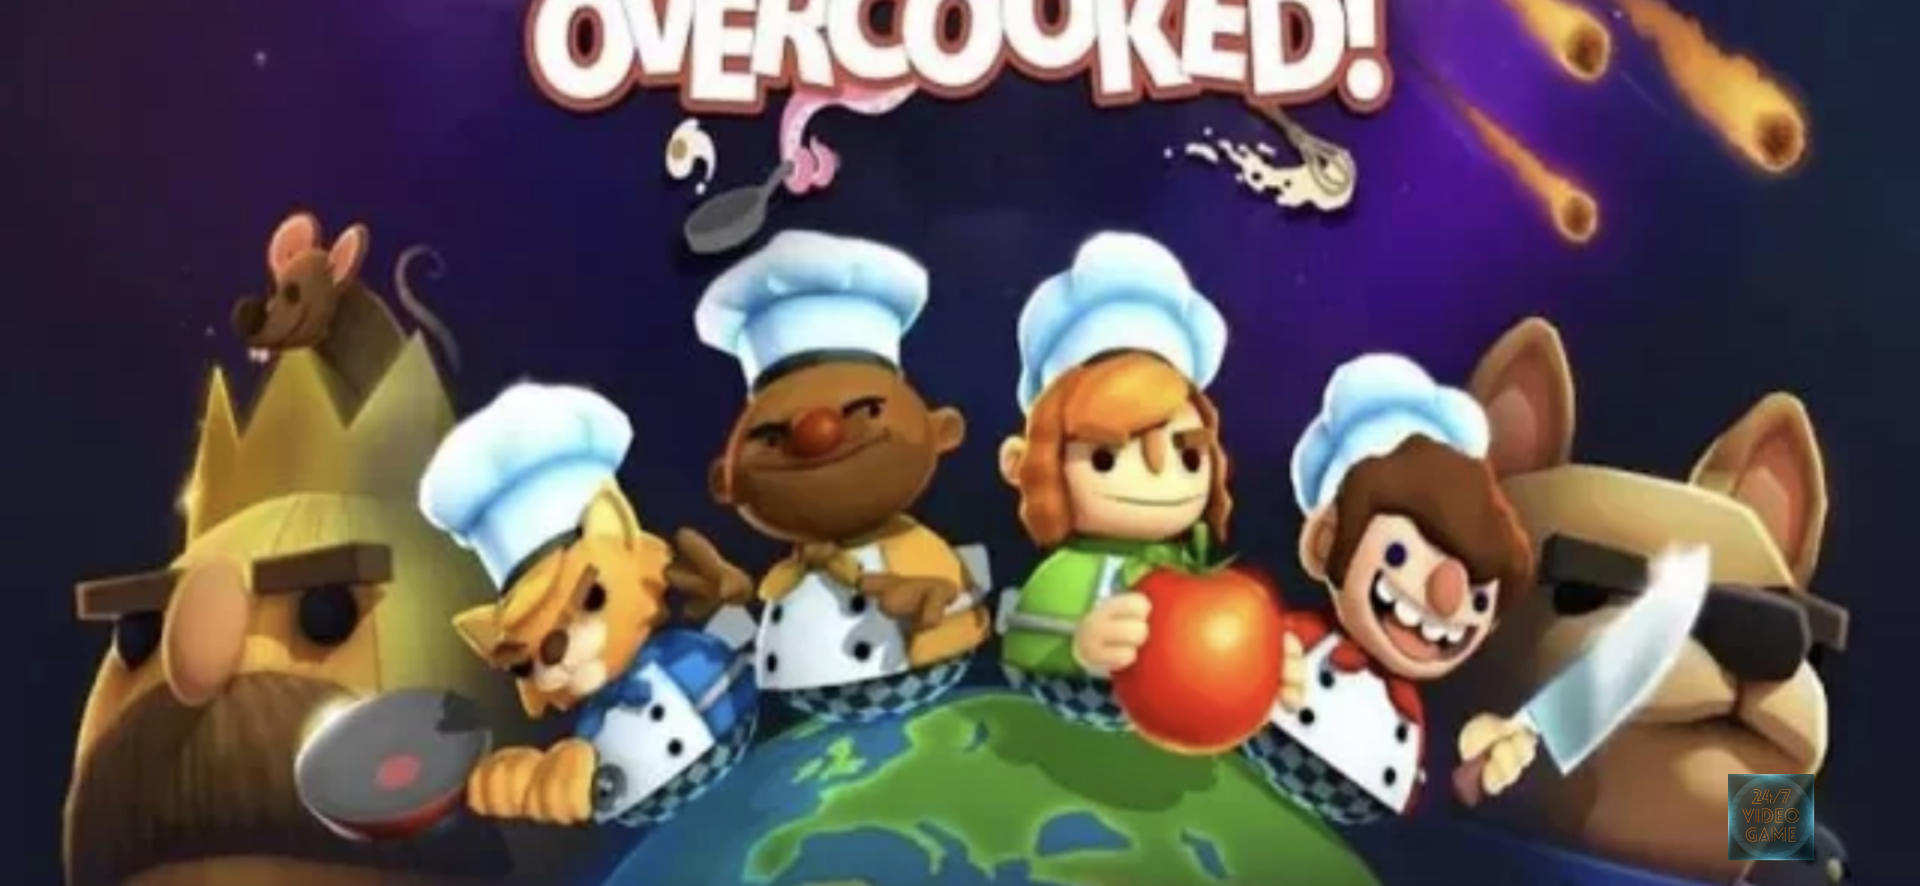 Overcooked!Gameplay